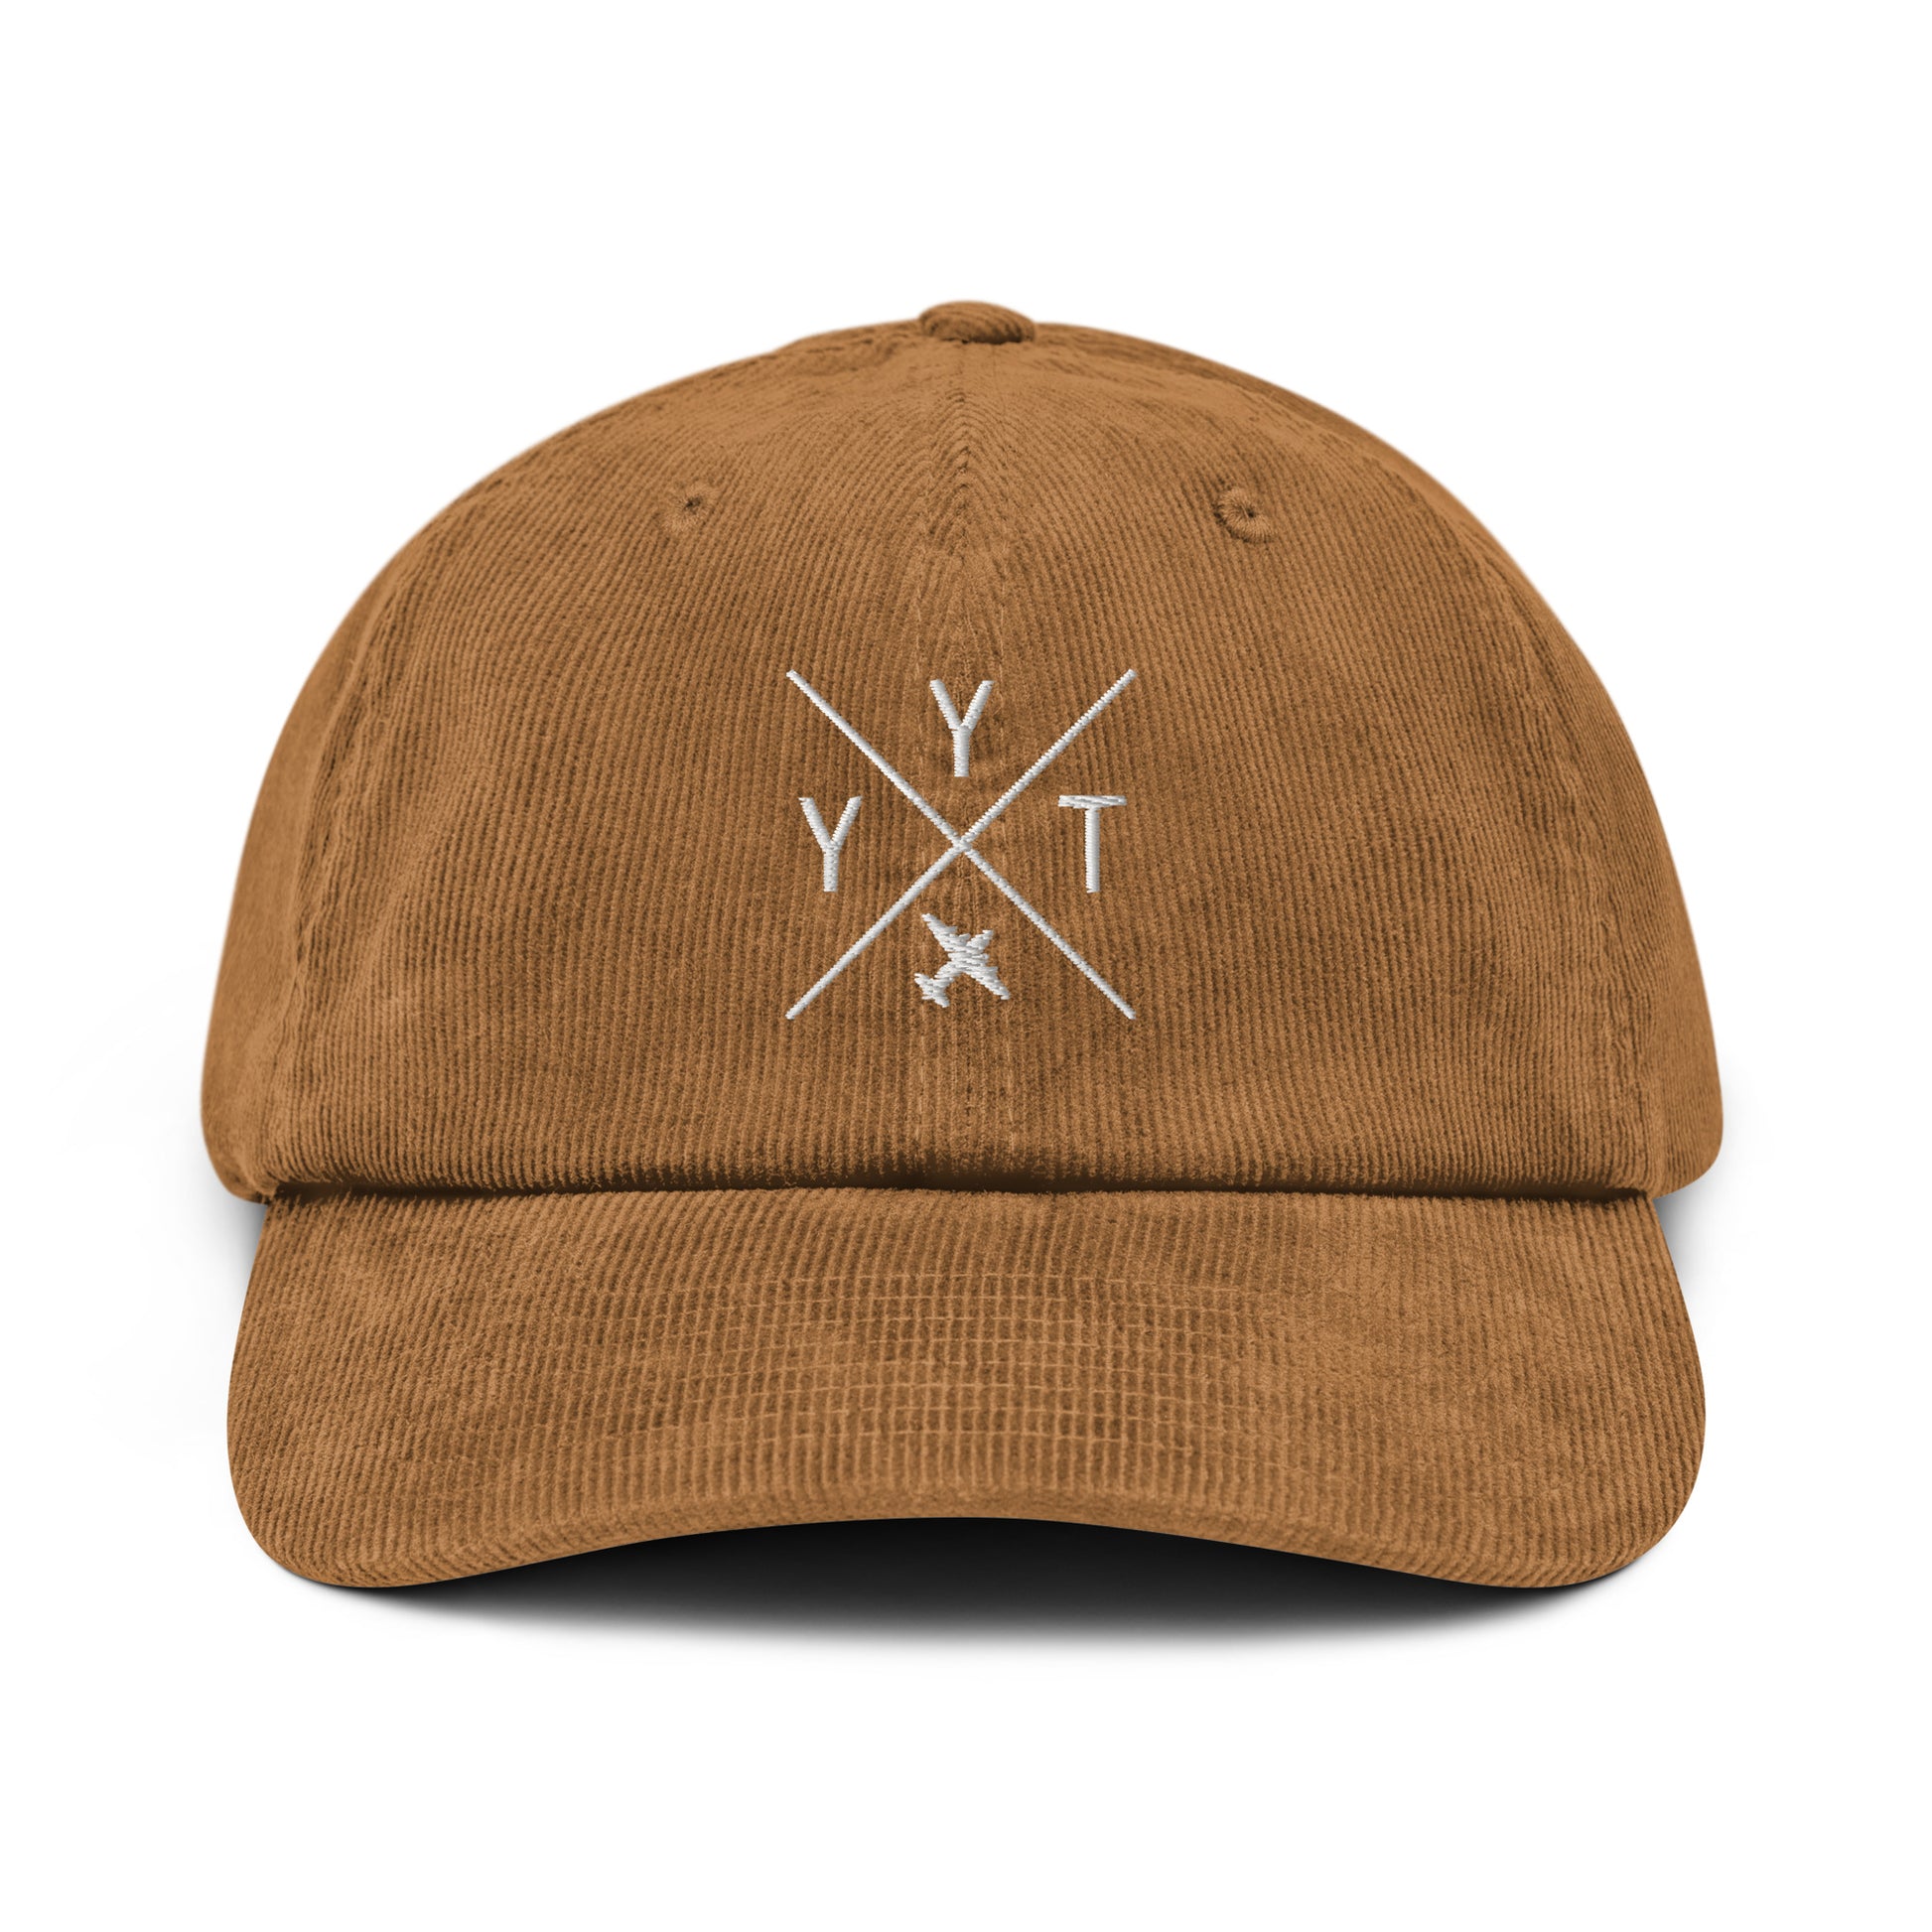 Crossed-X Corduroy Hat - White • YYT St. John's • YHM Designs - Image 21